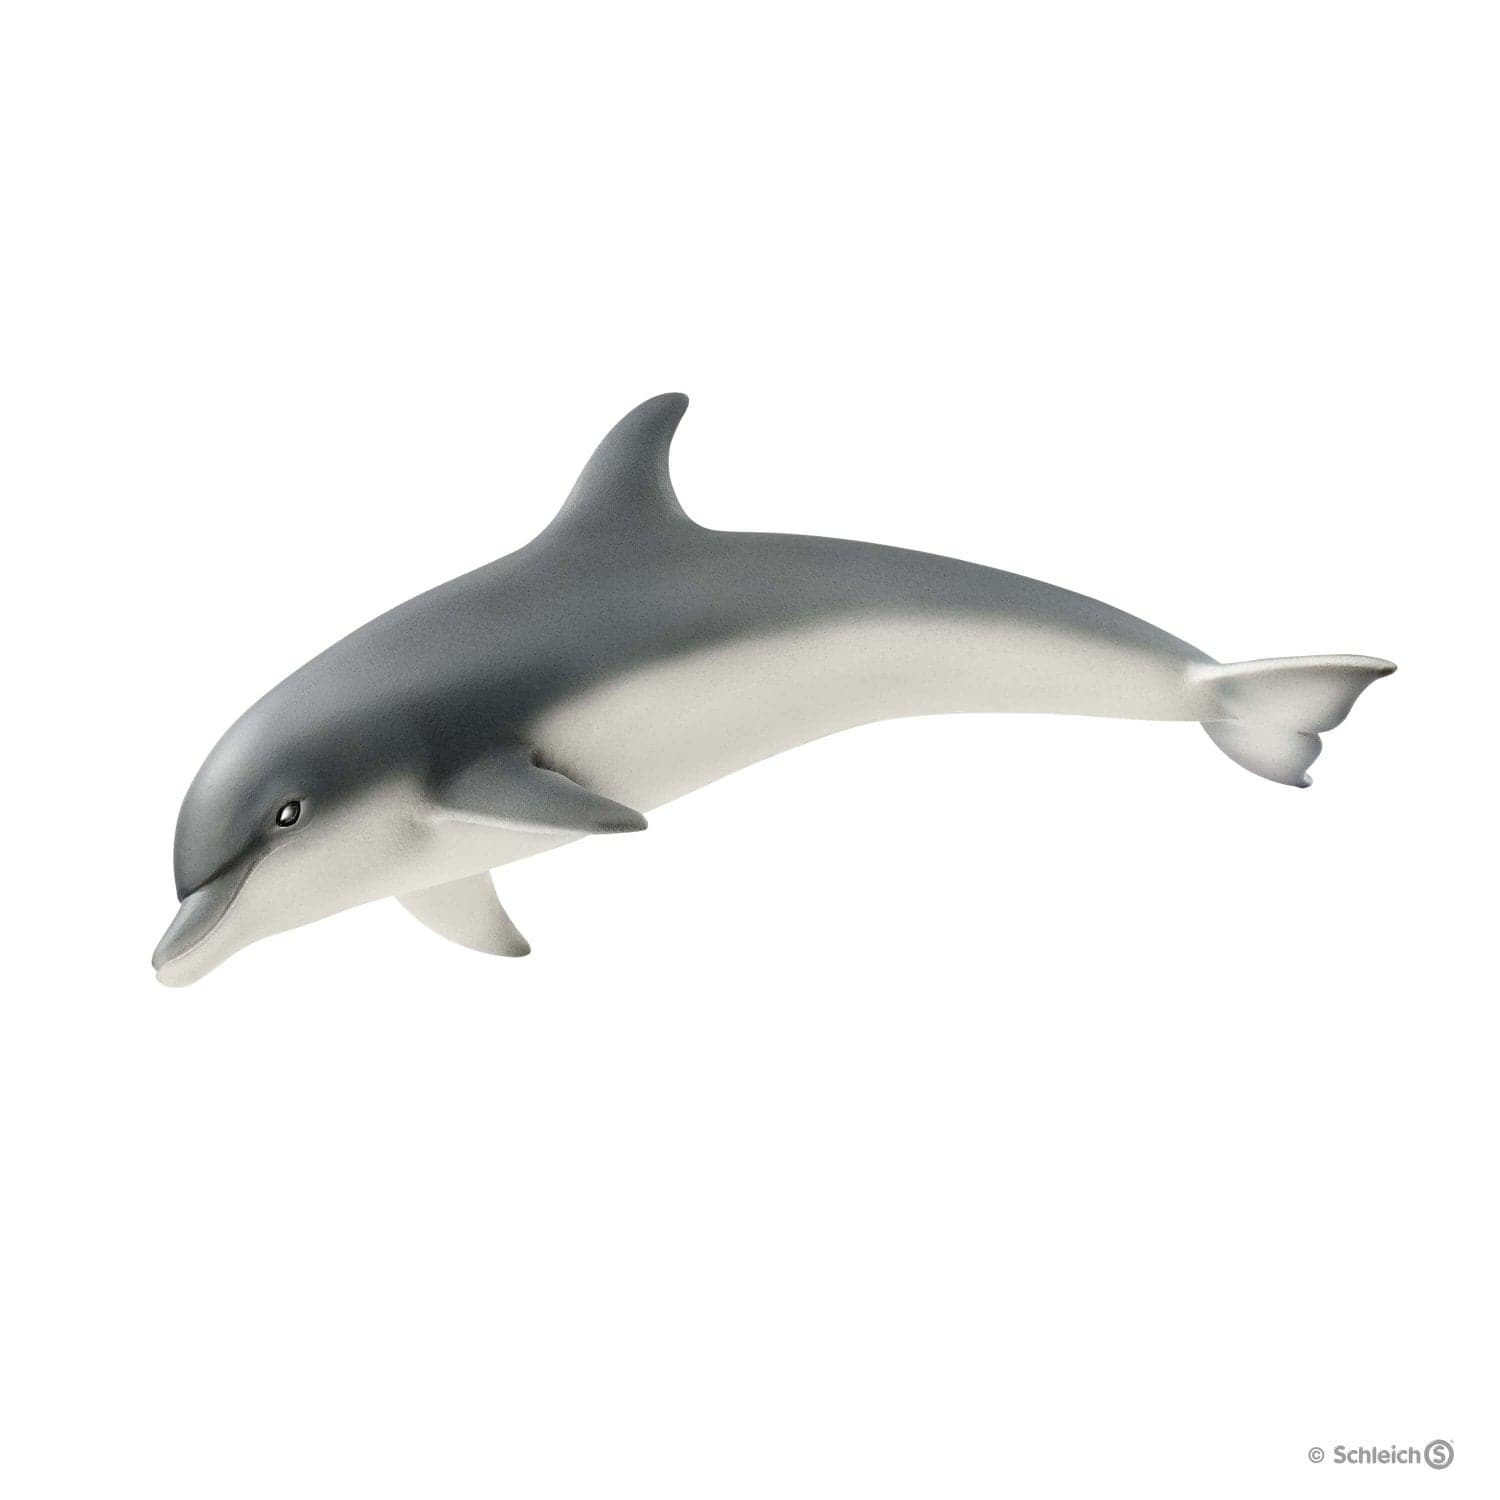  COHEALI 28pcs Micro Landscape Dolphin Boys Toys Mini